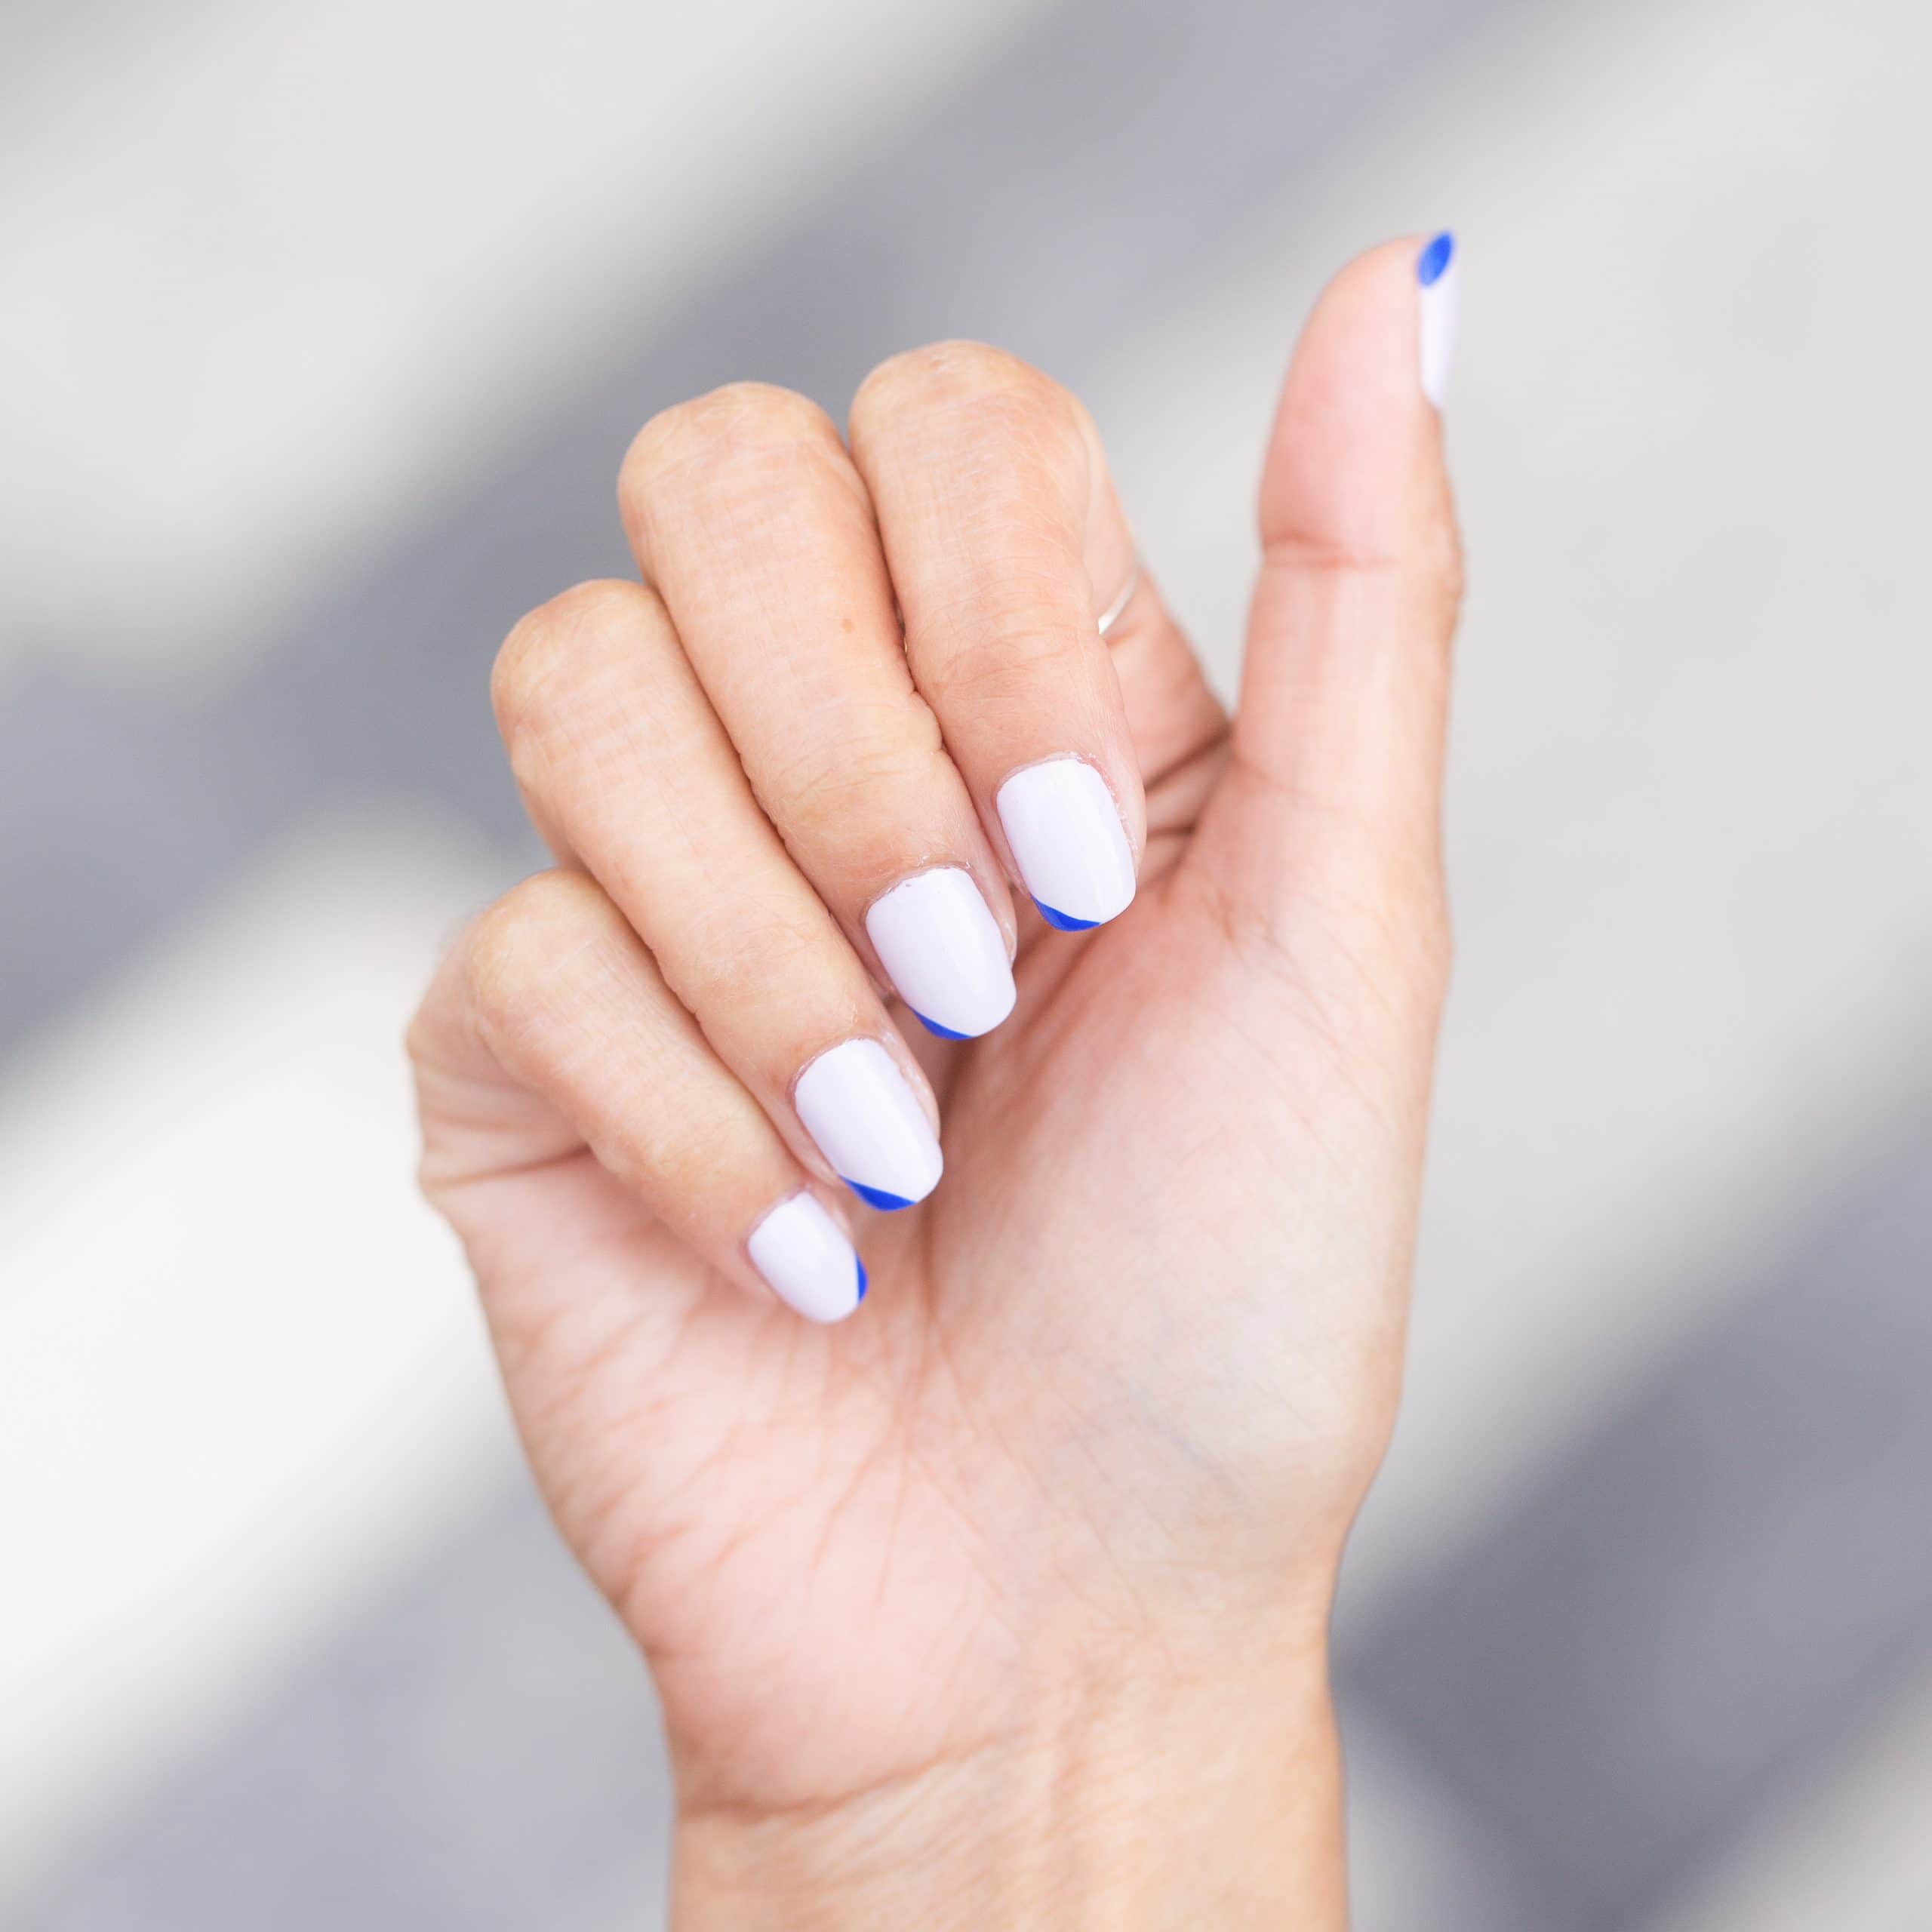 49 Cute Nail Art Design Ideas With Pretty & Creative Details : Bright blue  and white Nail Design